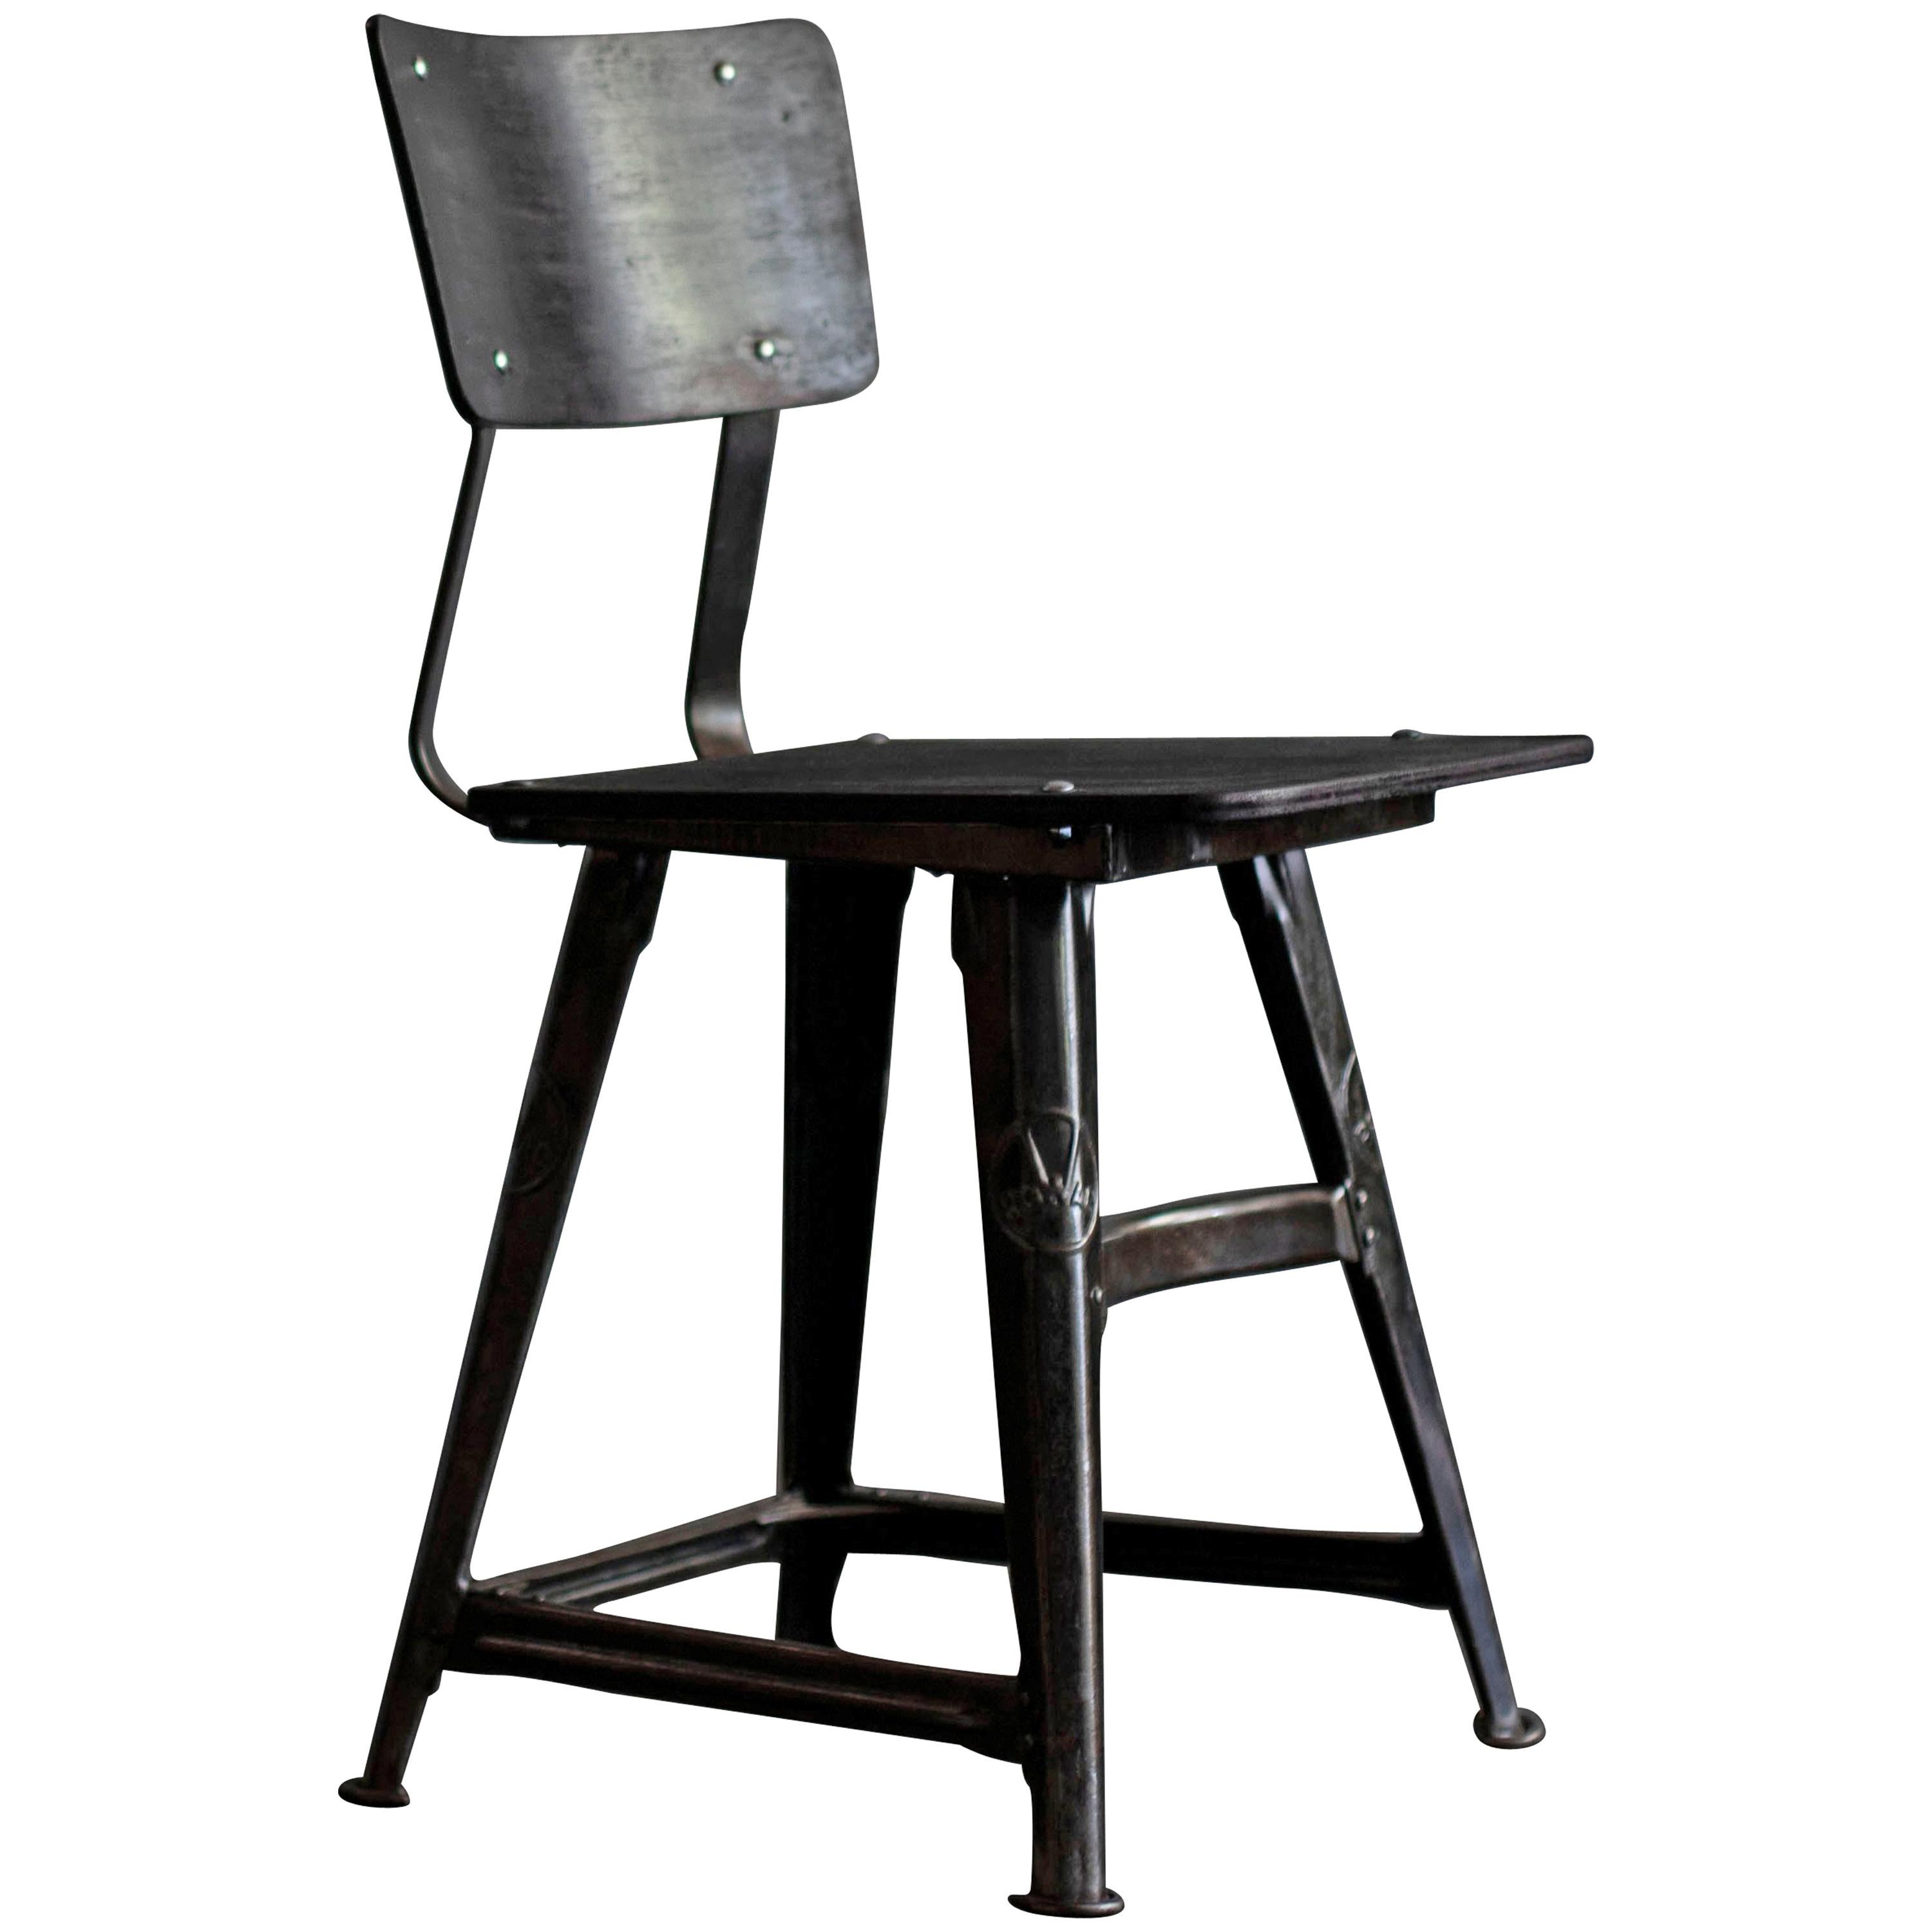 Rowac Workshop Chair, No. 11